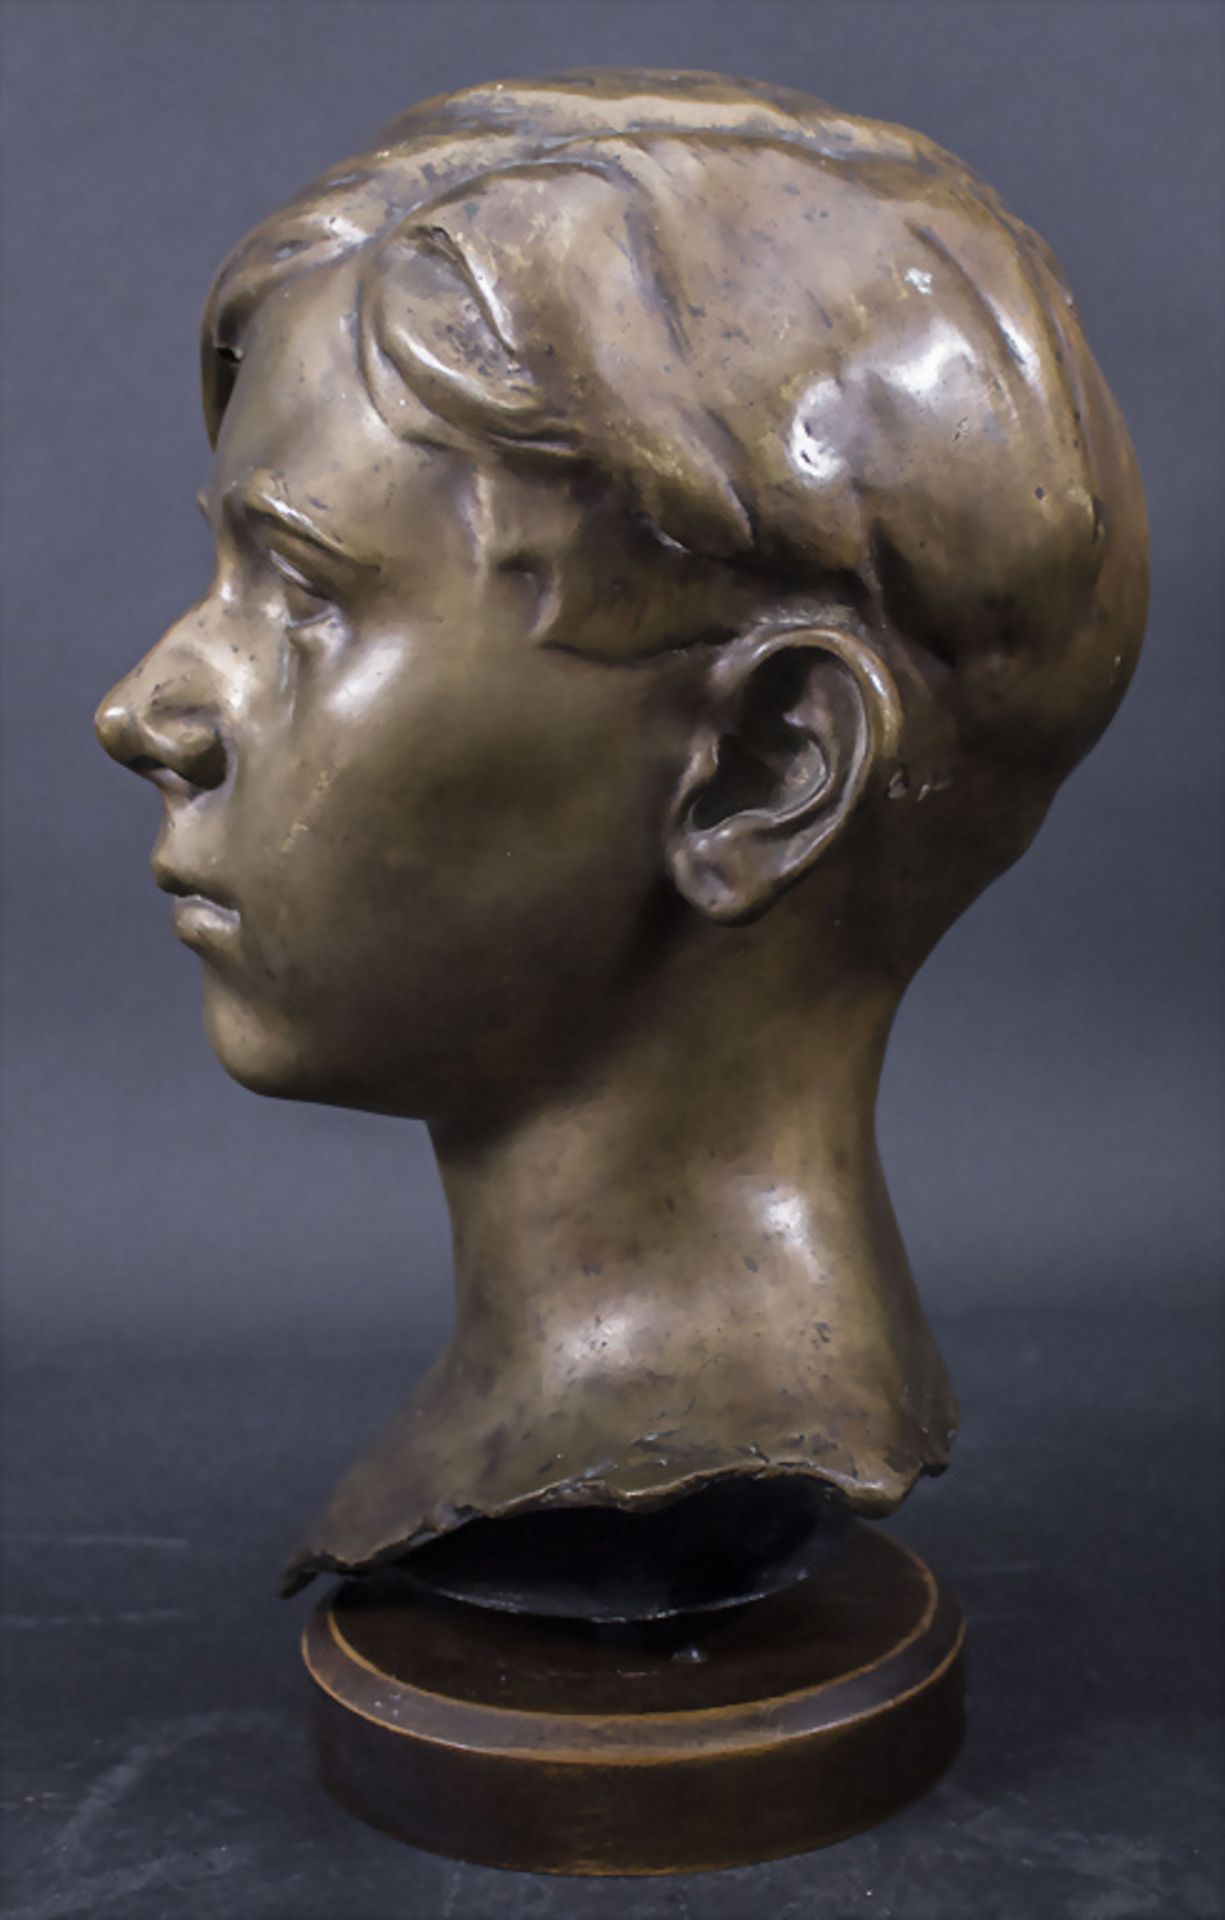 Bronzeplastik 'Knabe' / An Art Nouveau bronze sculpture of a young boy, Francois Vanczak, 1932 - Image 5 of 10